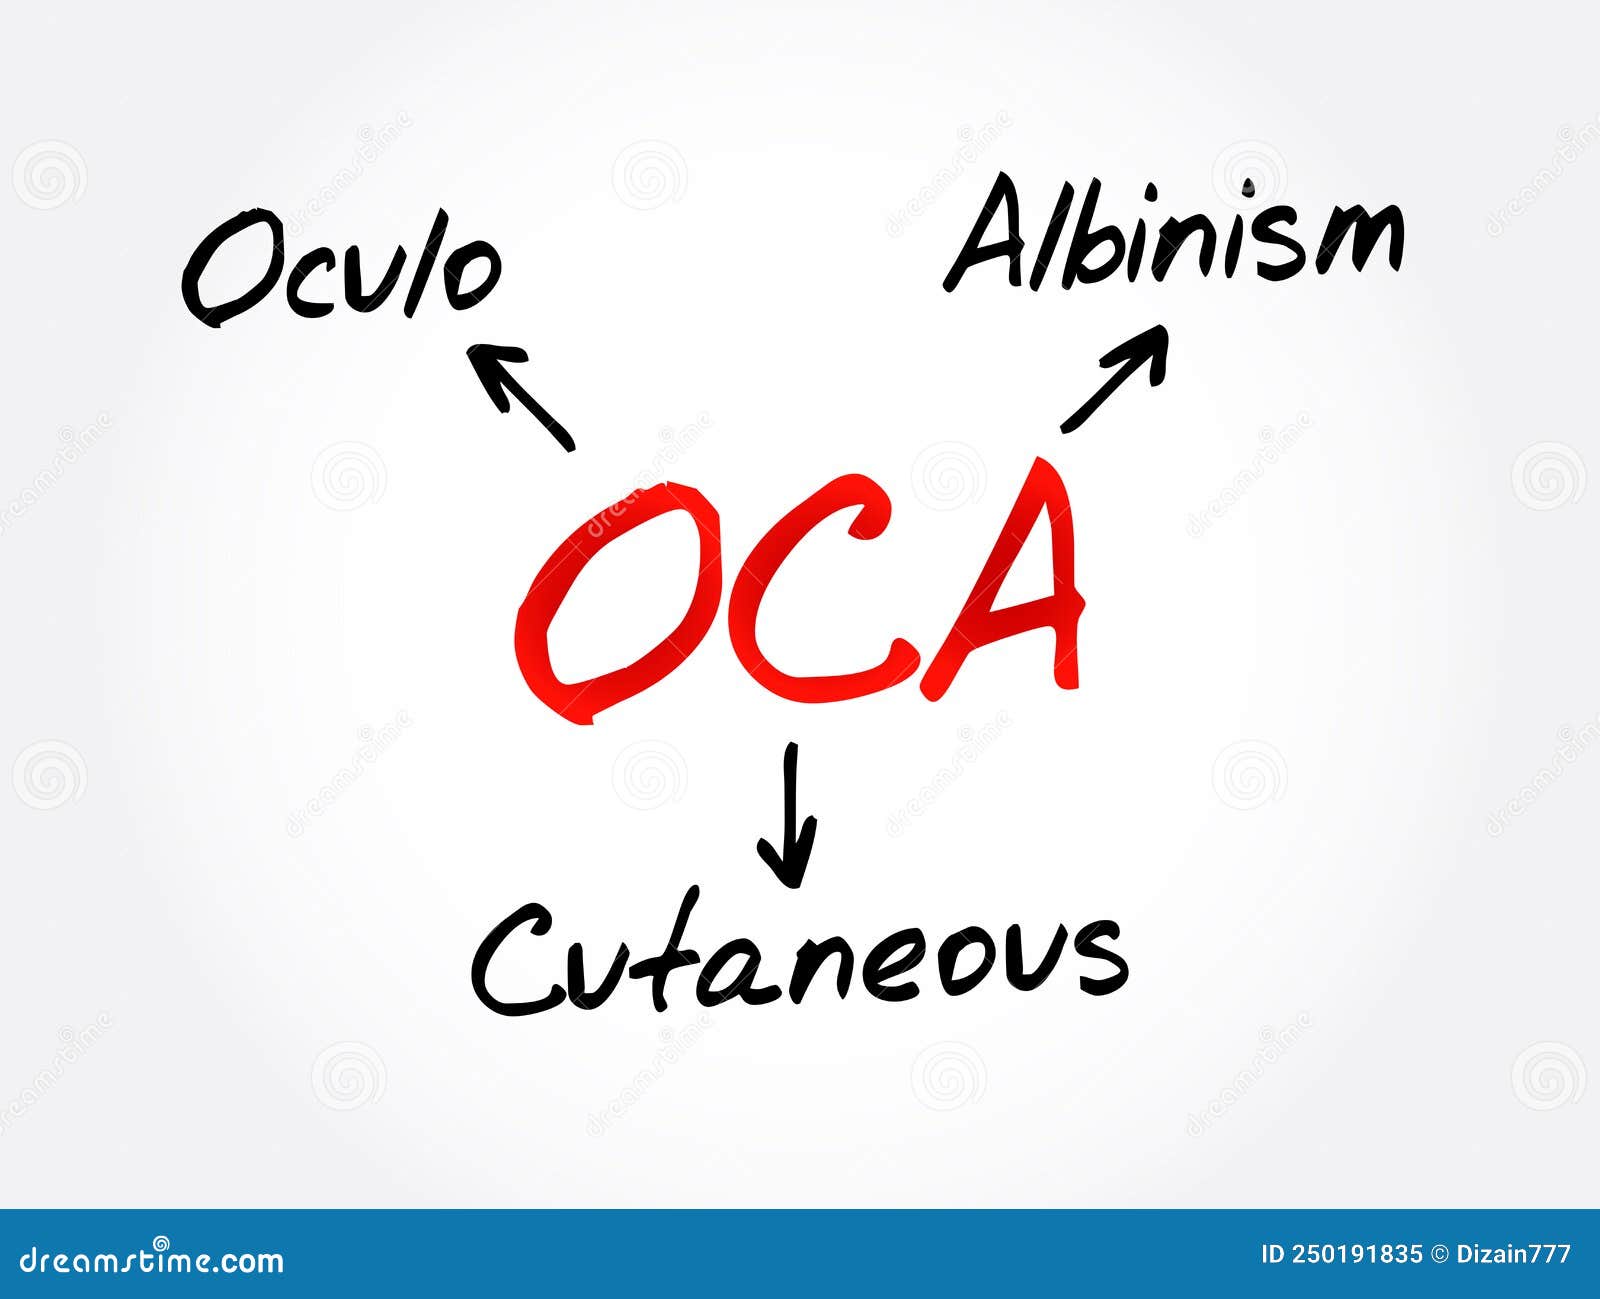 oca - oculo cutaneous albinism acronym, concept background